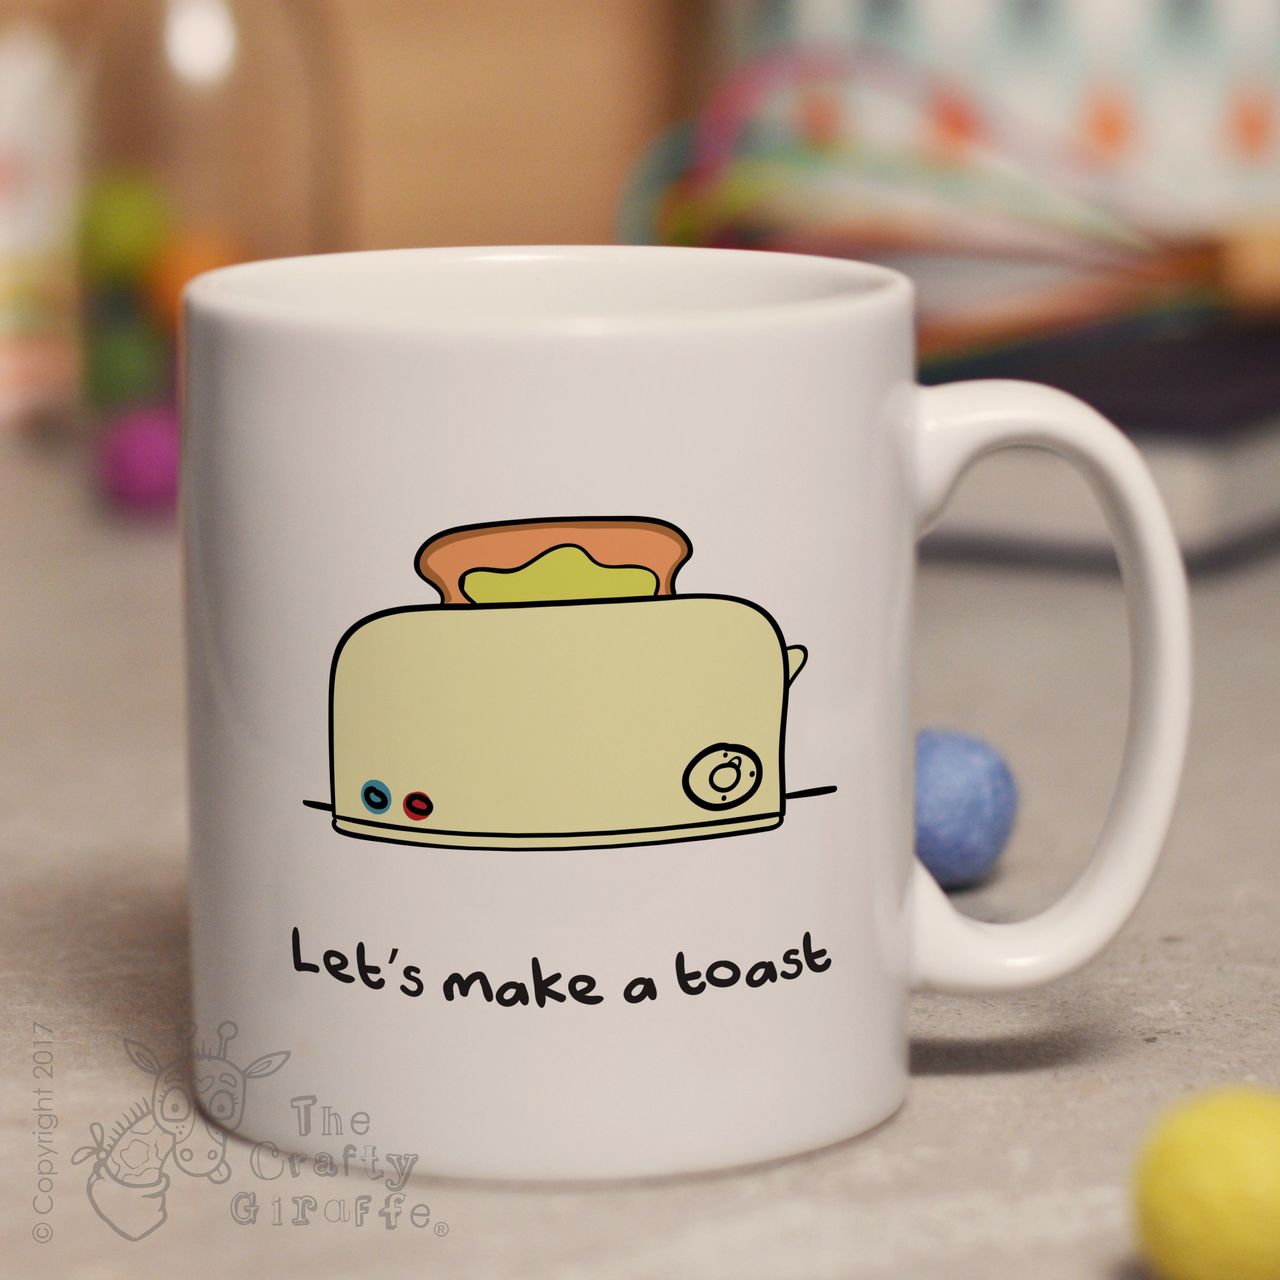 Let’s make a toast mug